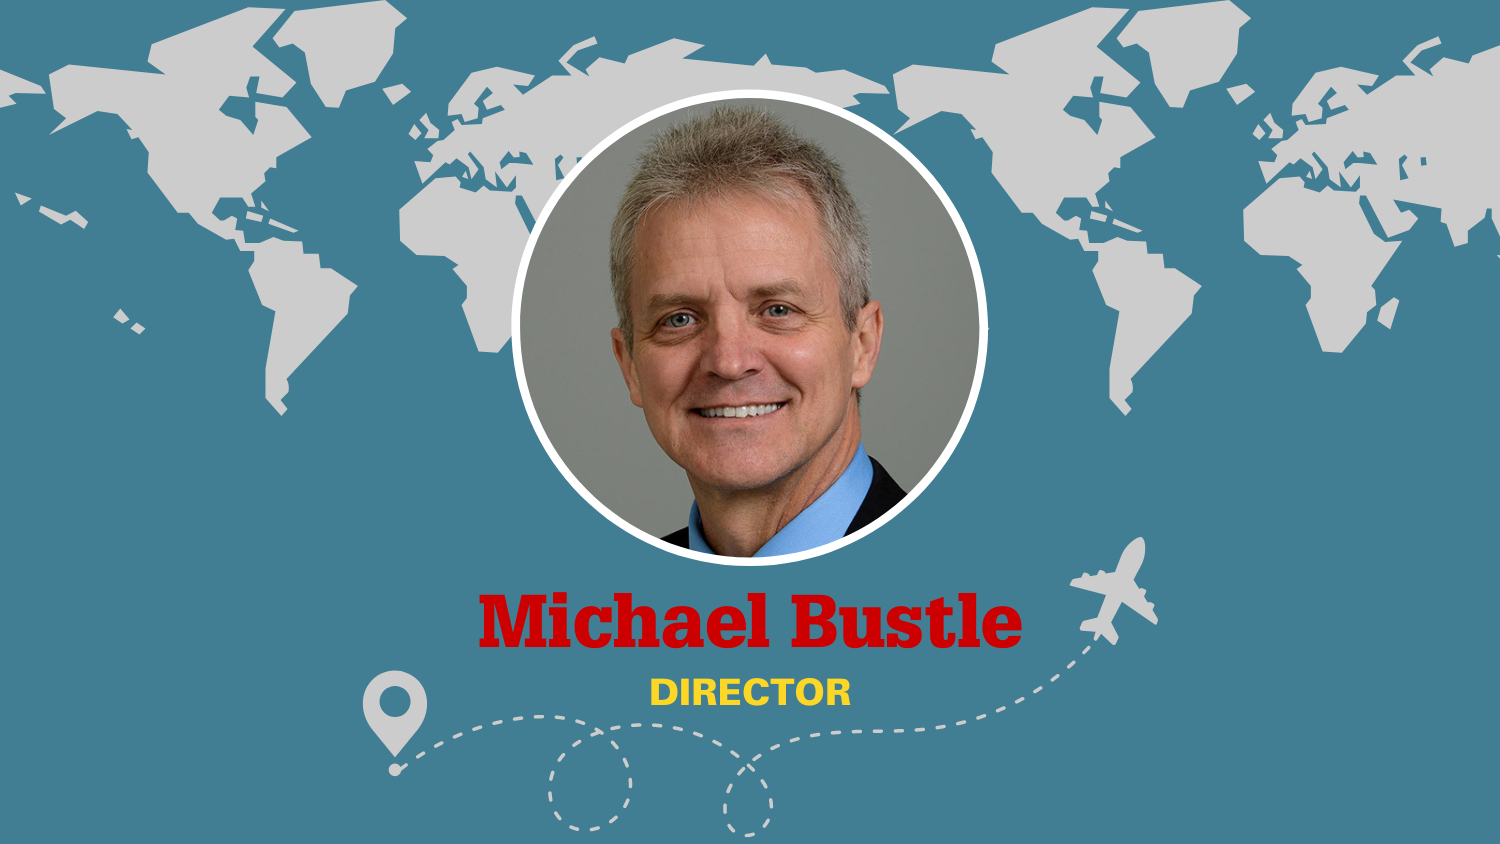 meet the team: Michael Bustle